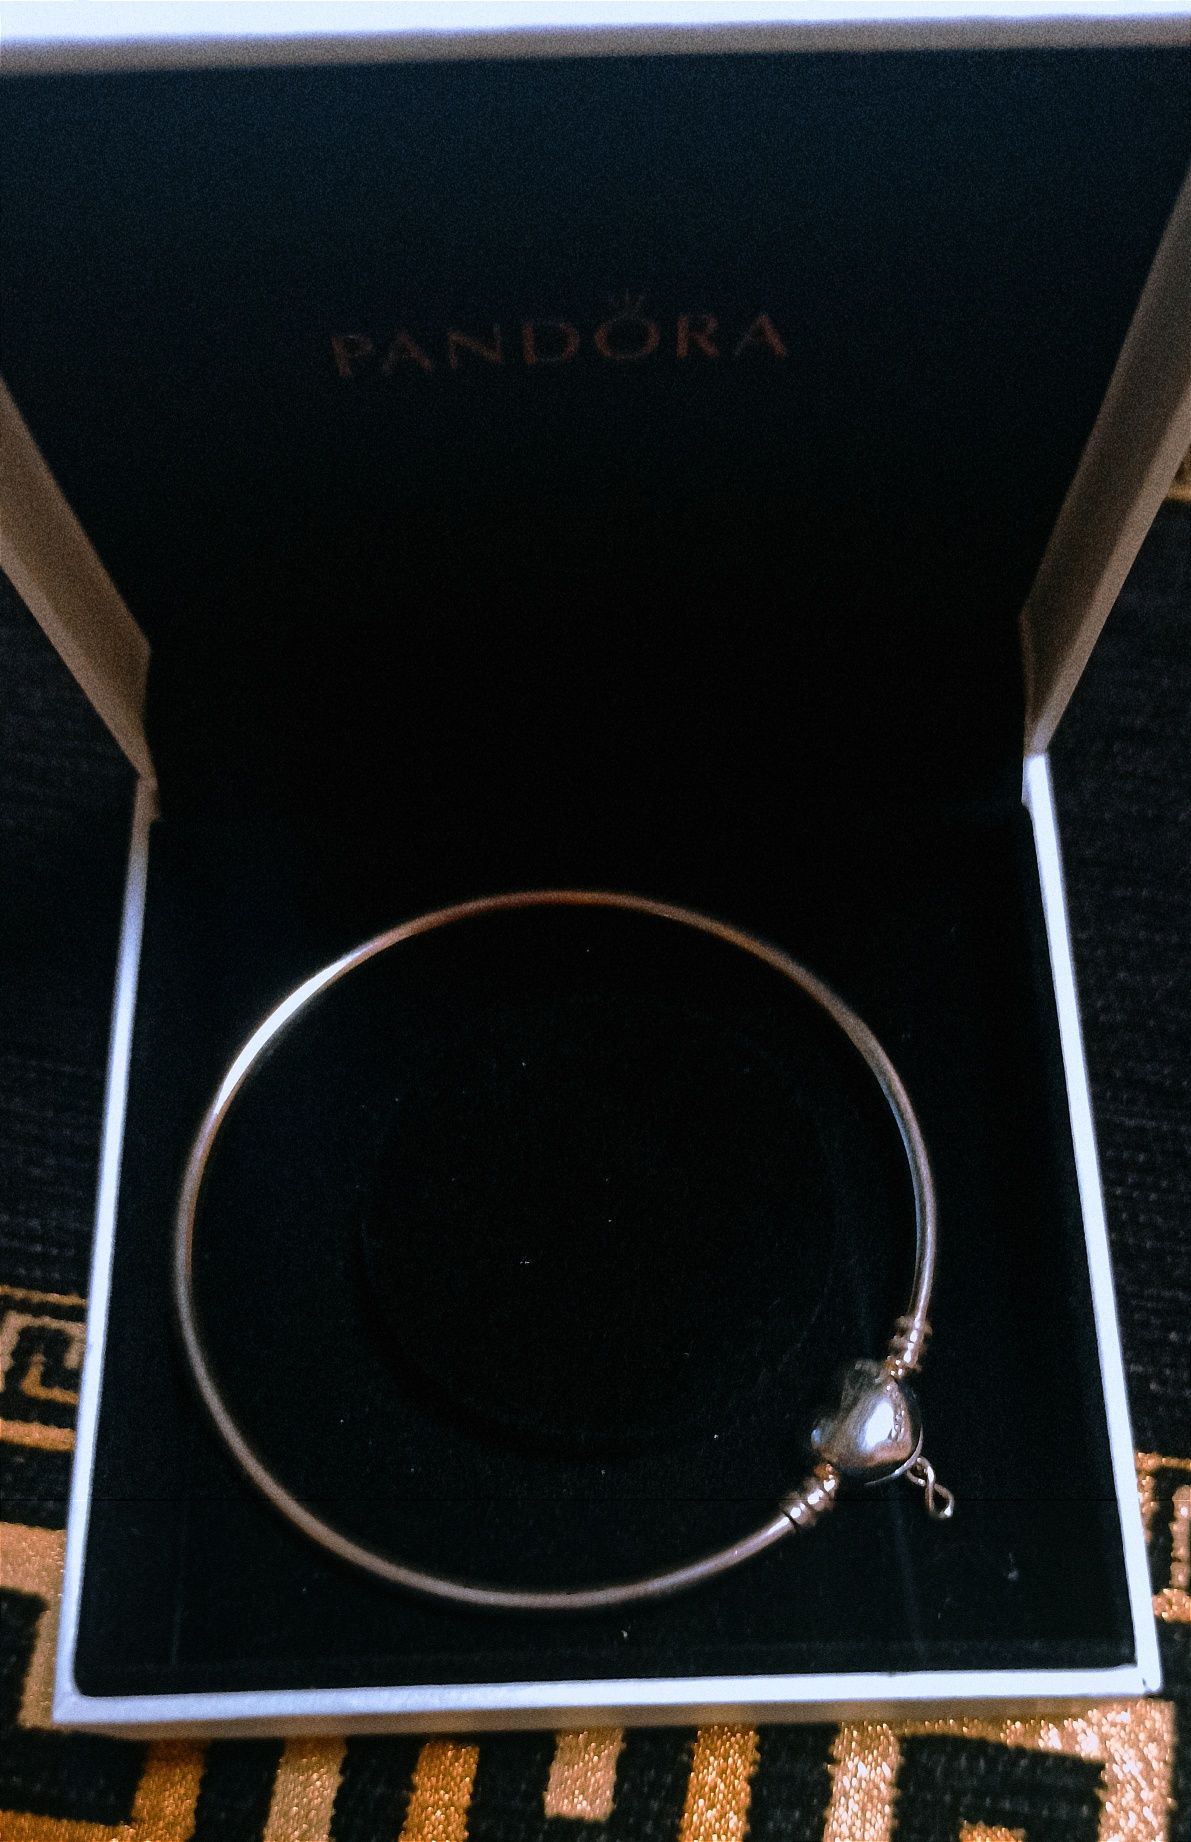 Pandora - браслет-бангл "Символ кохання"